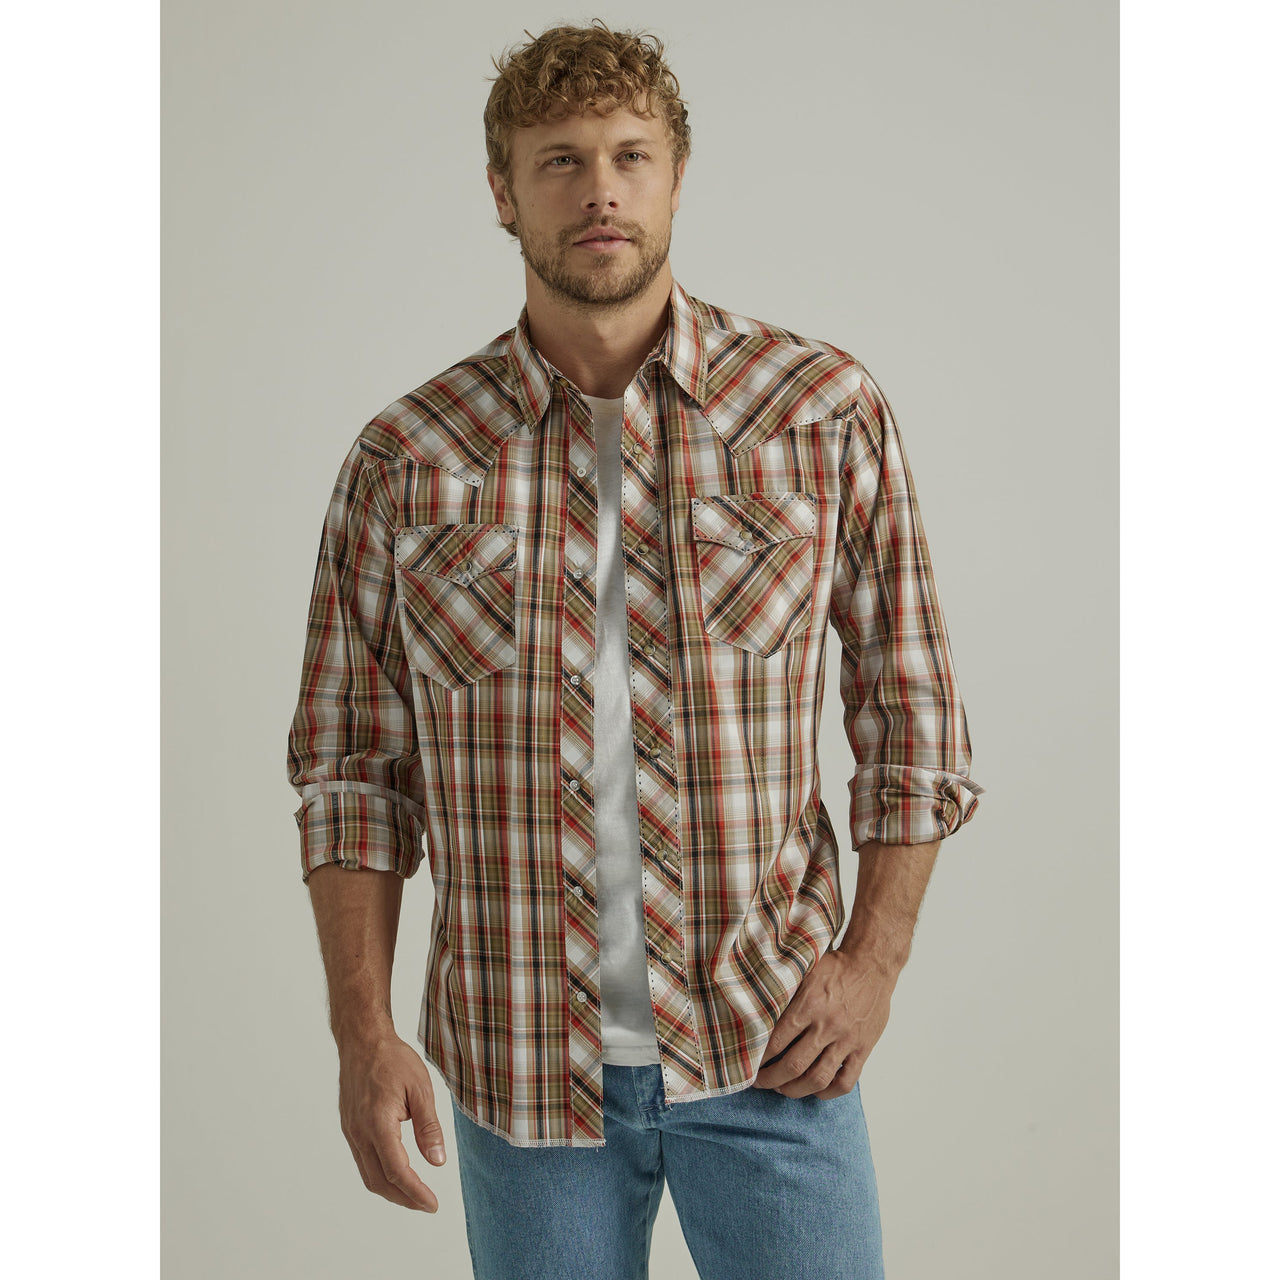 Wrangler Men's Wrinkle Free Long Sleeve Snap Shirt - Brown/Orange